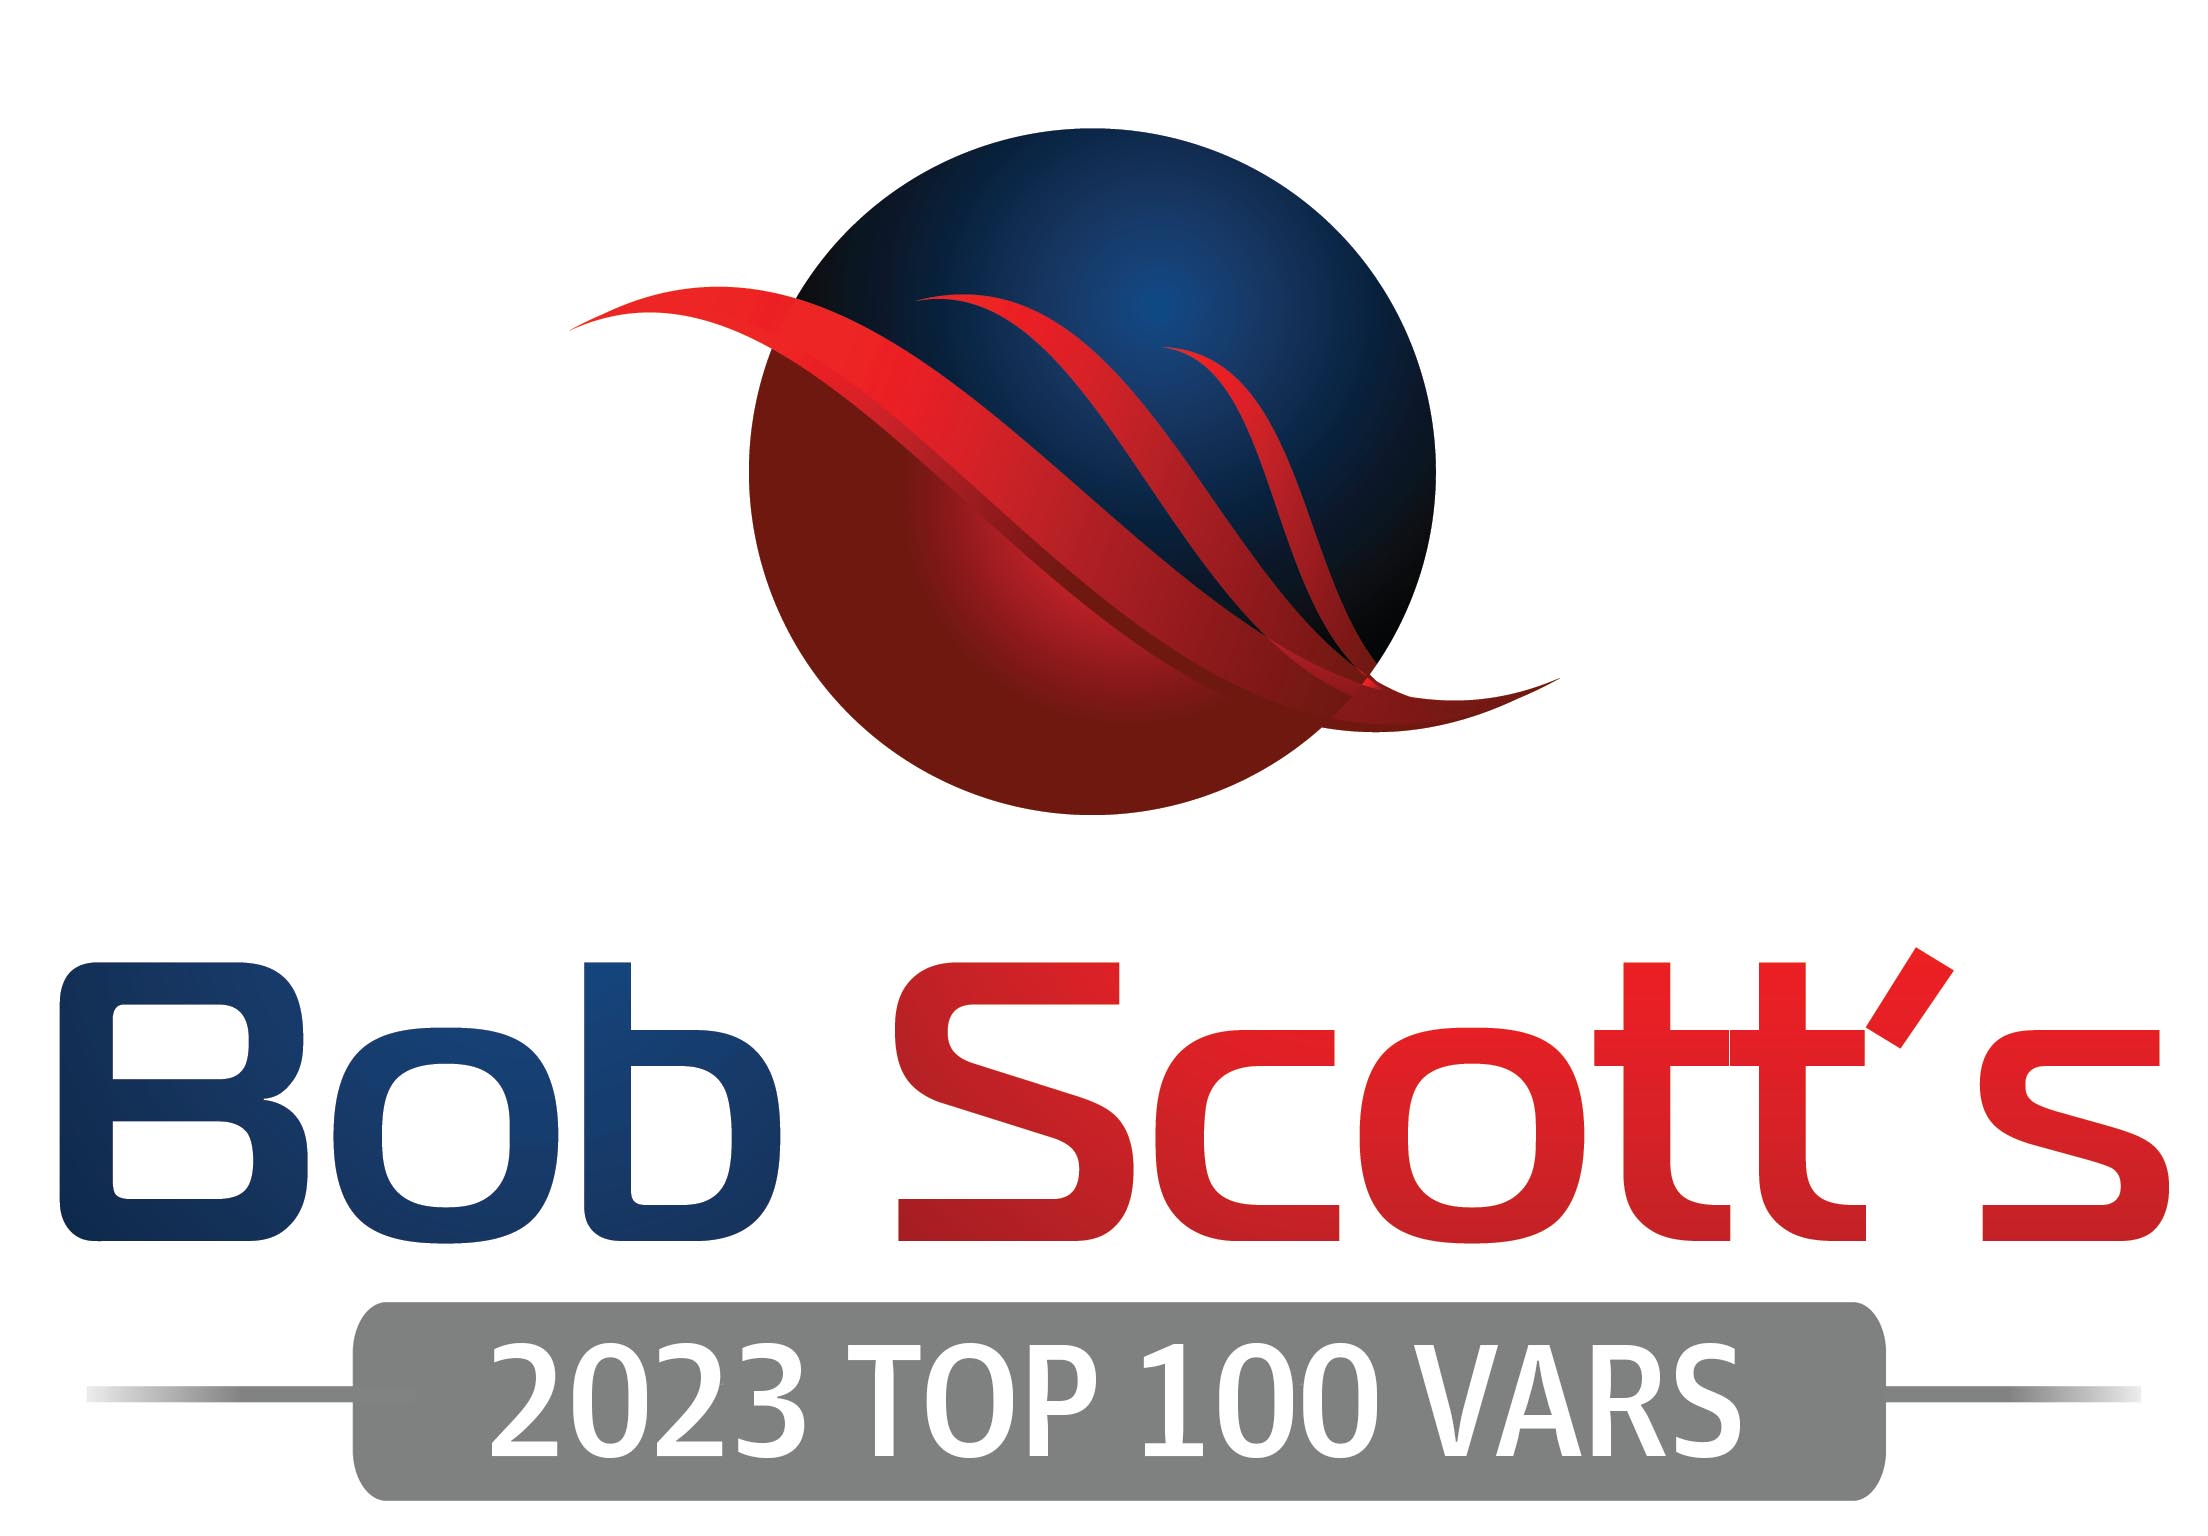 2023 Bob Scott's Top 100 logo